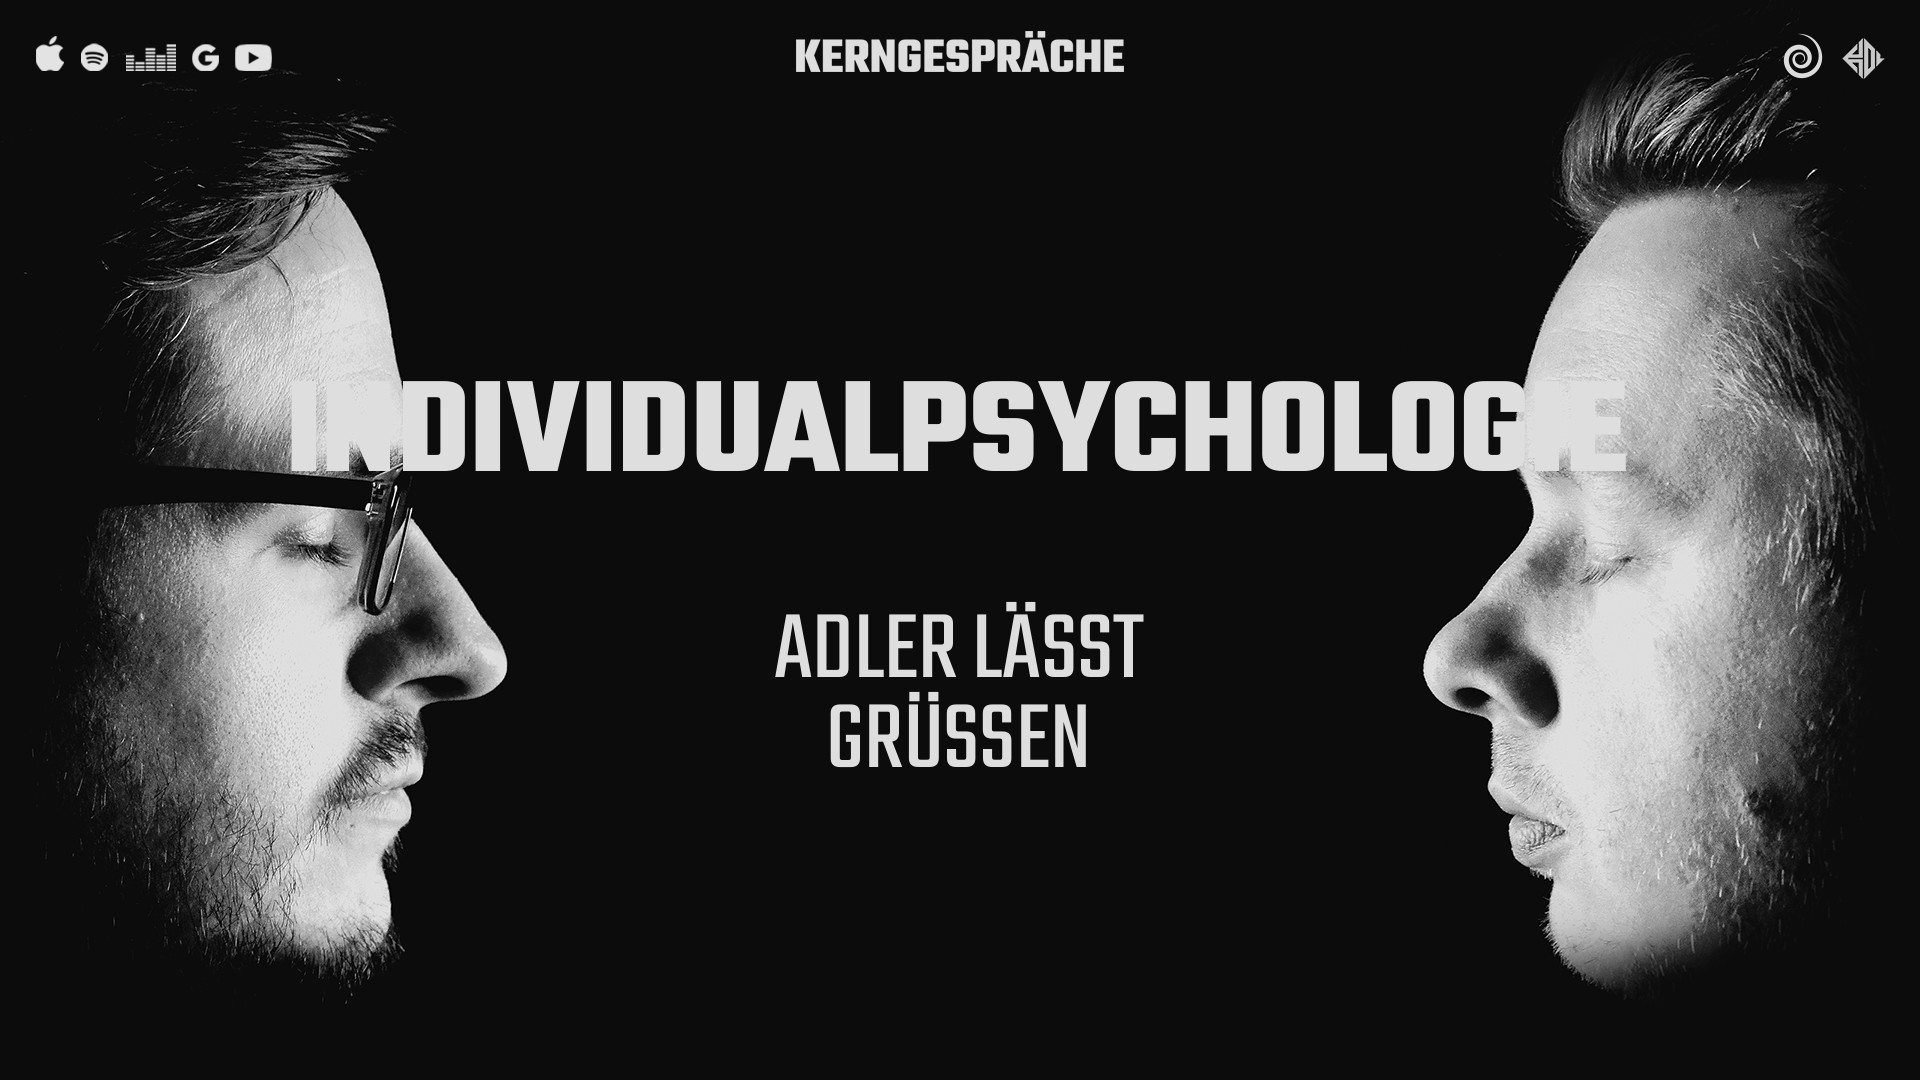 Individualpsychologie: Adler lässt grüßen